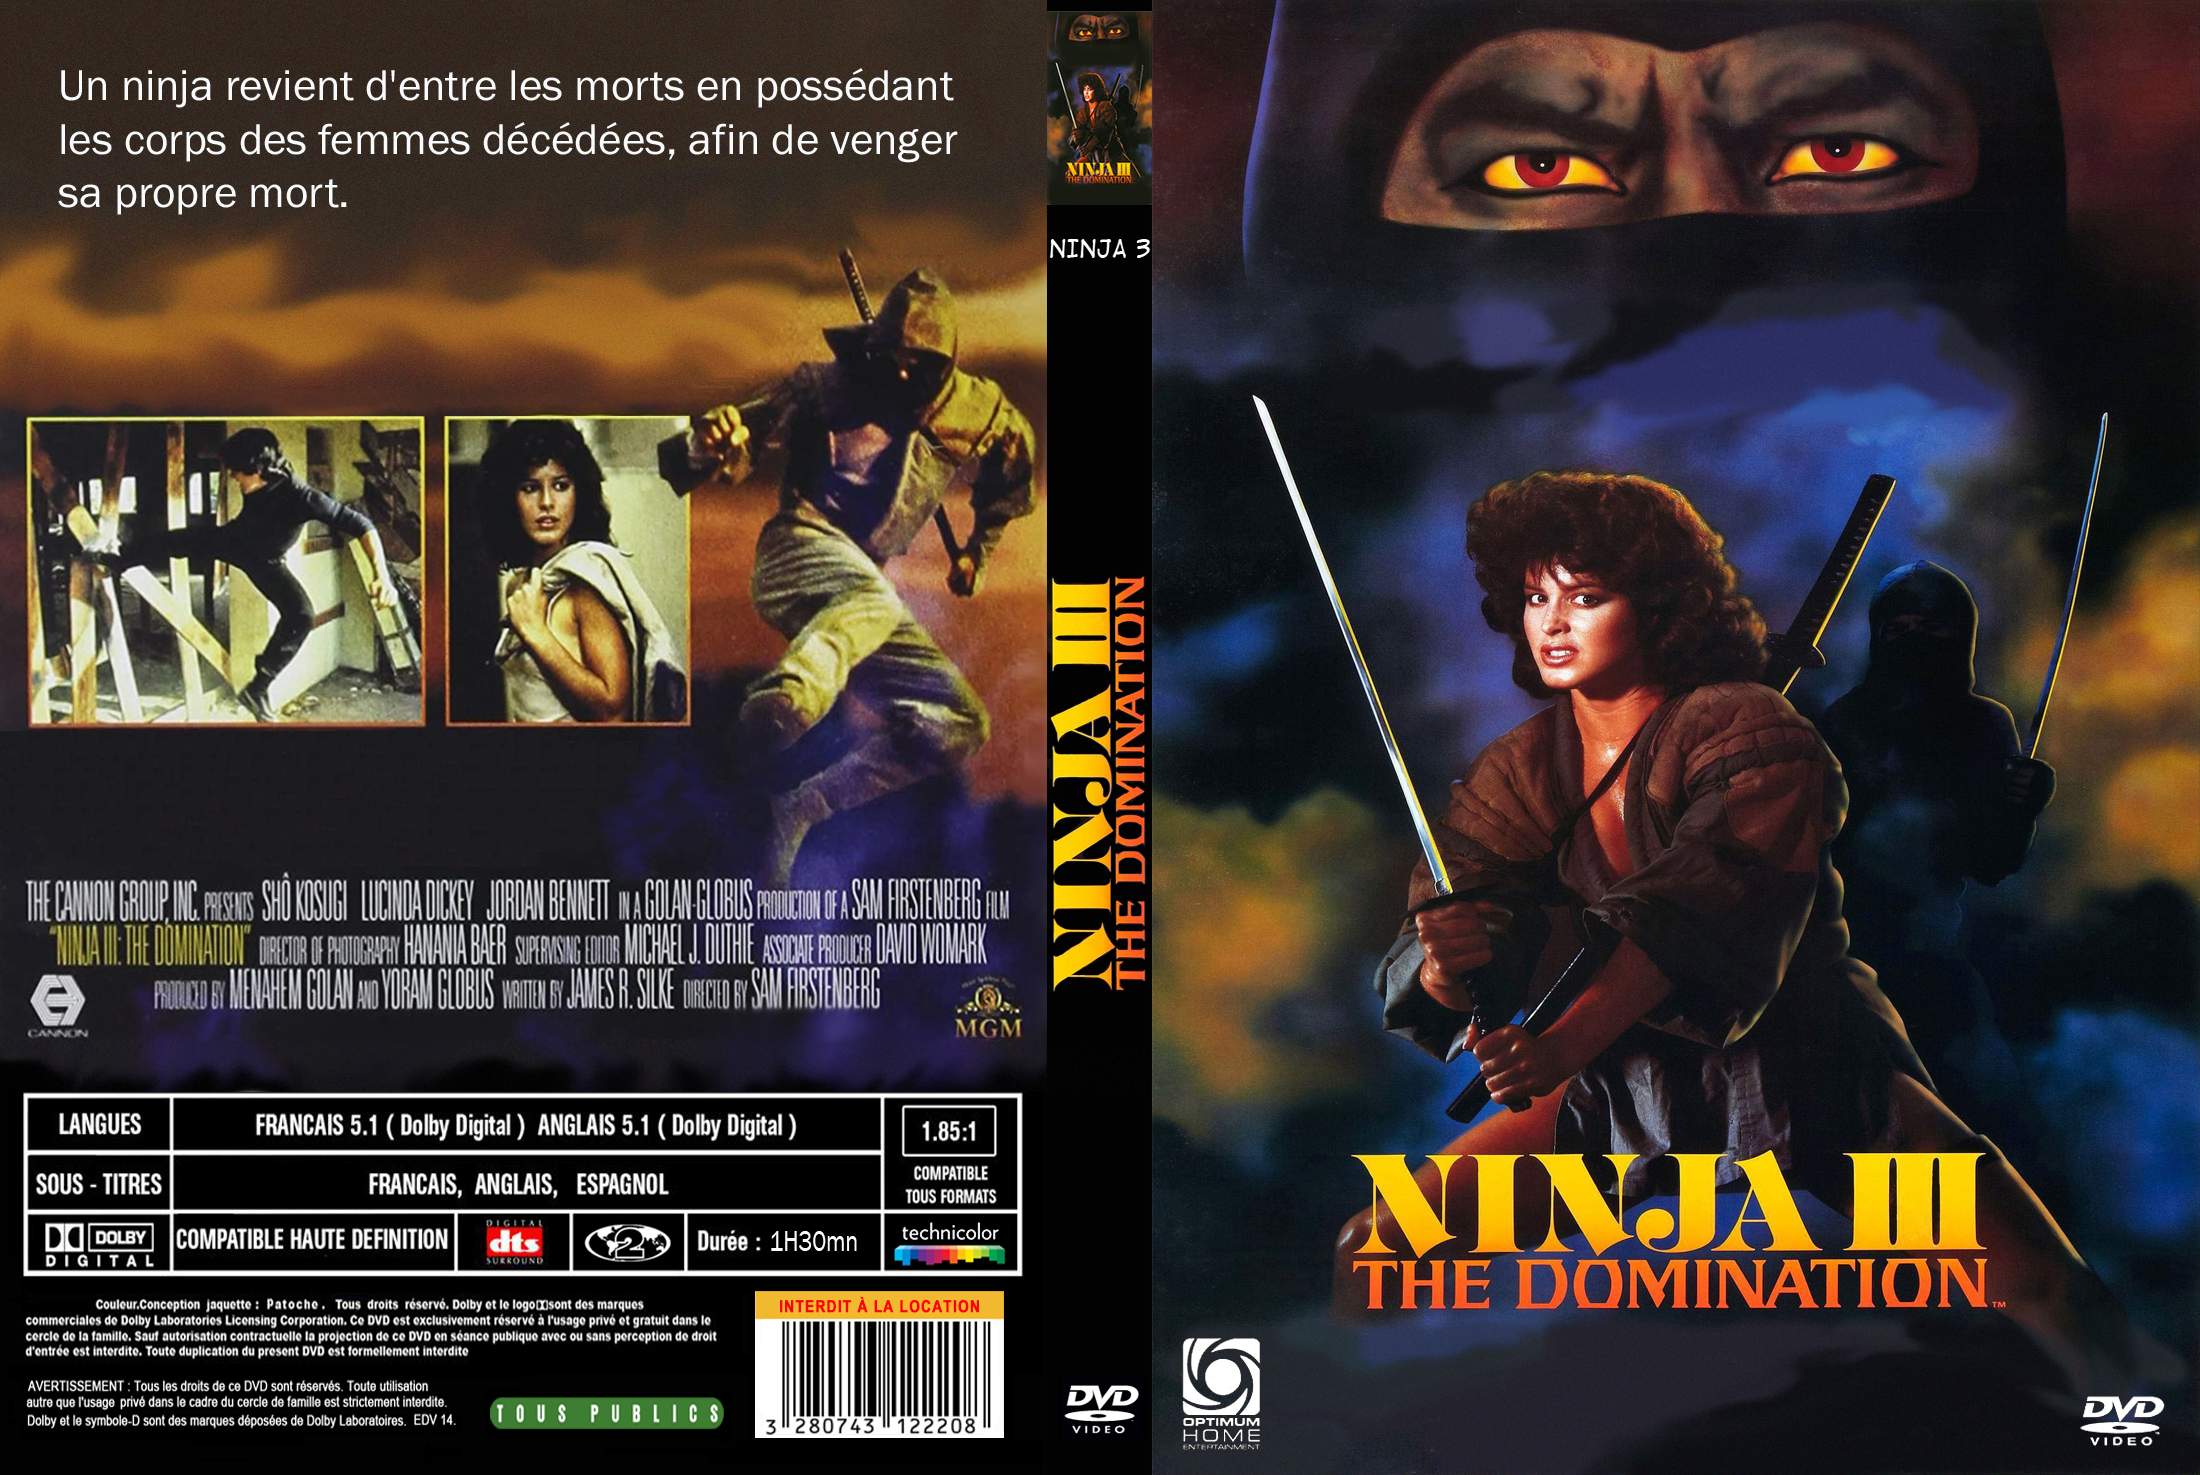 Jaquette DVD Ninja 3 the domination custom